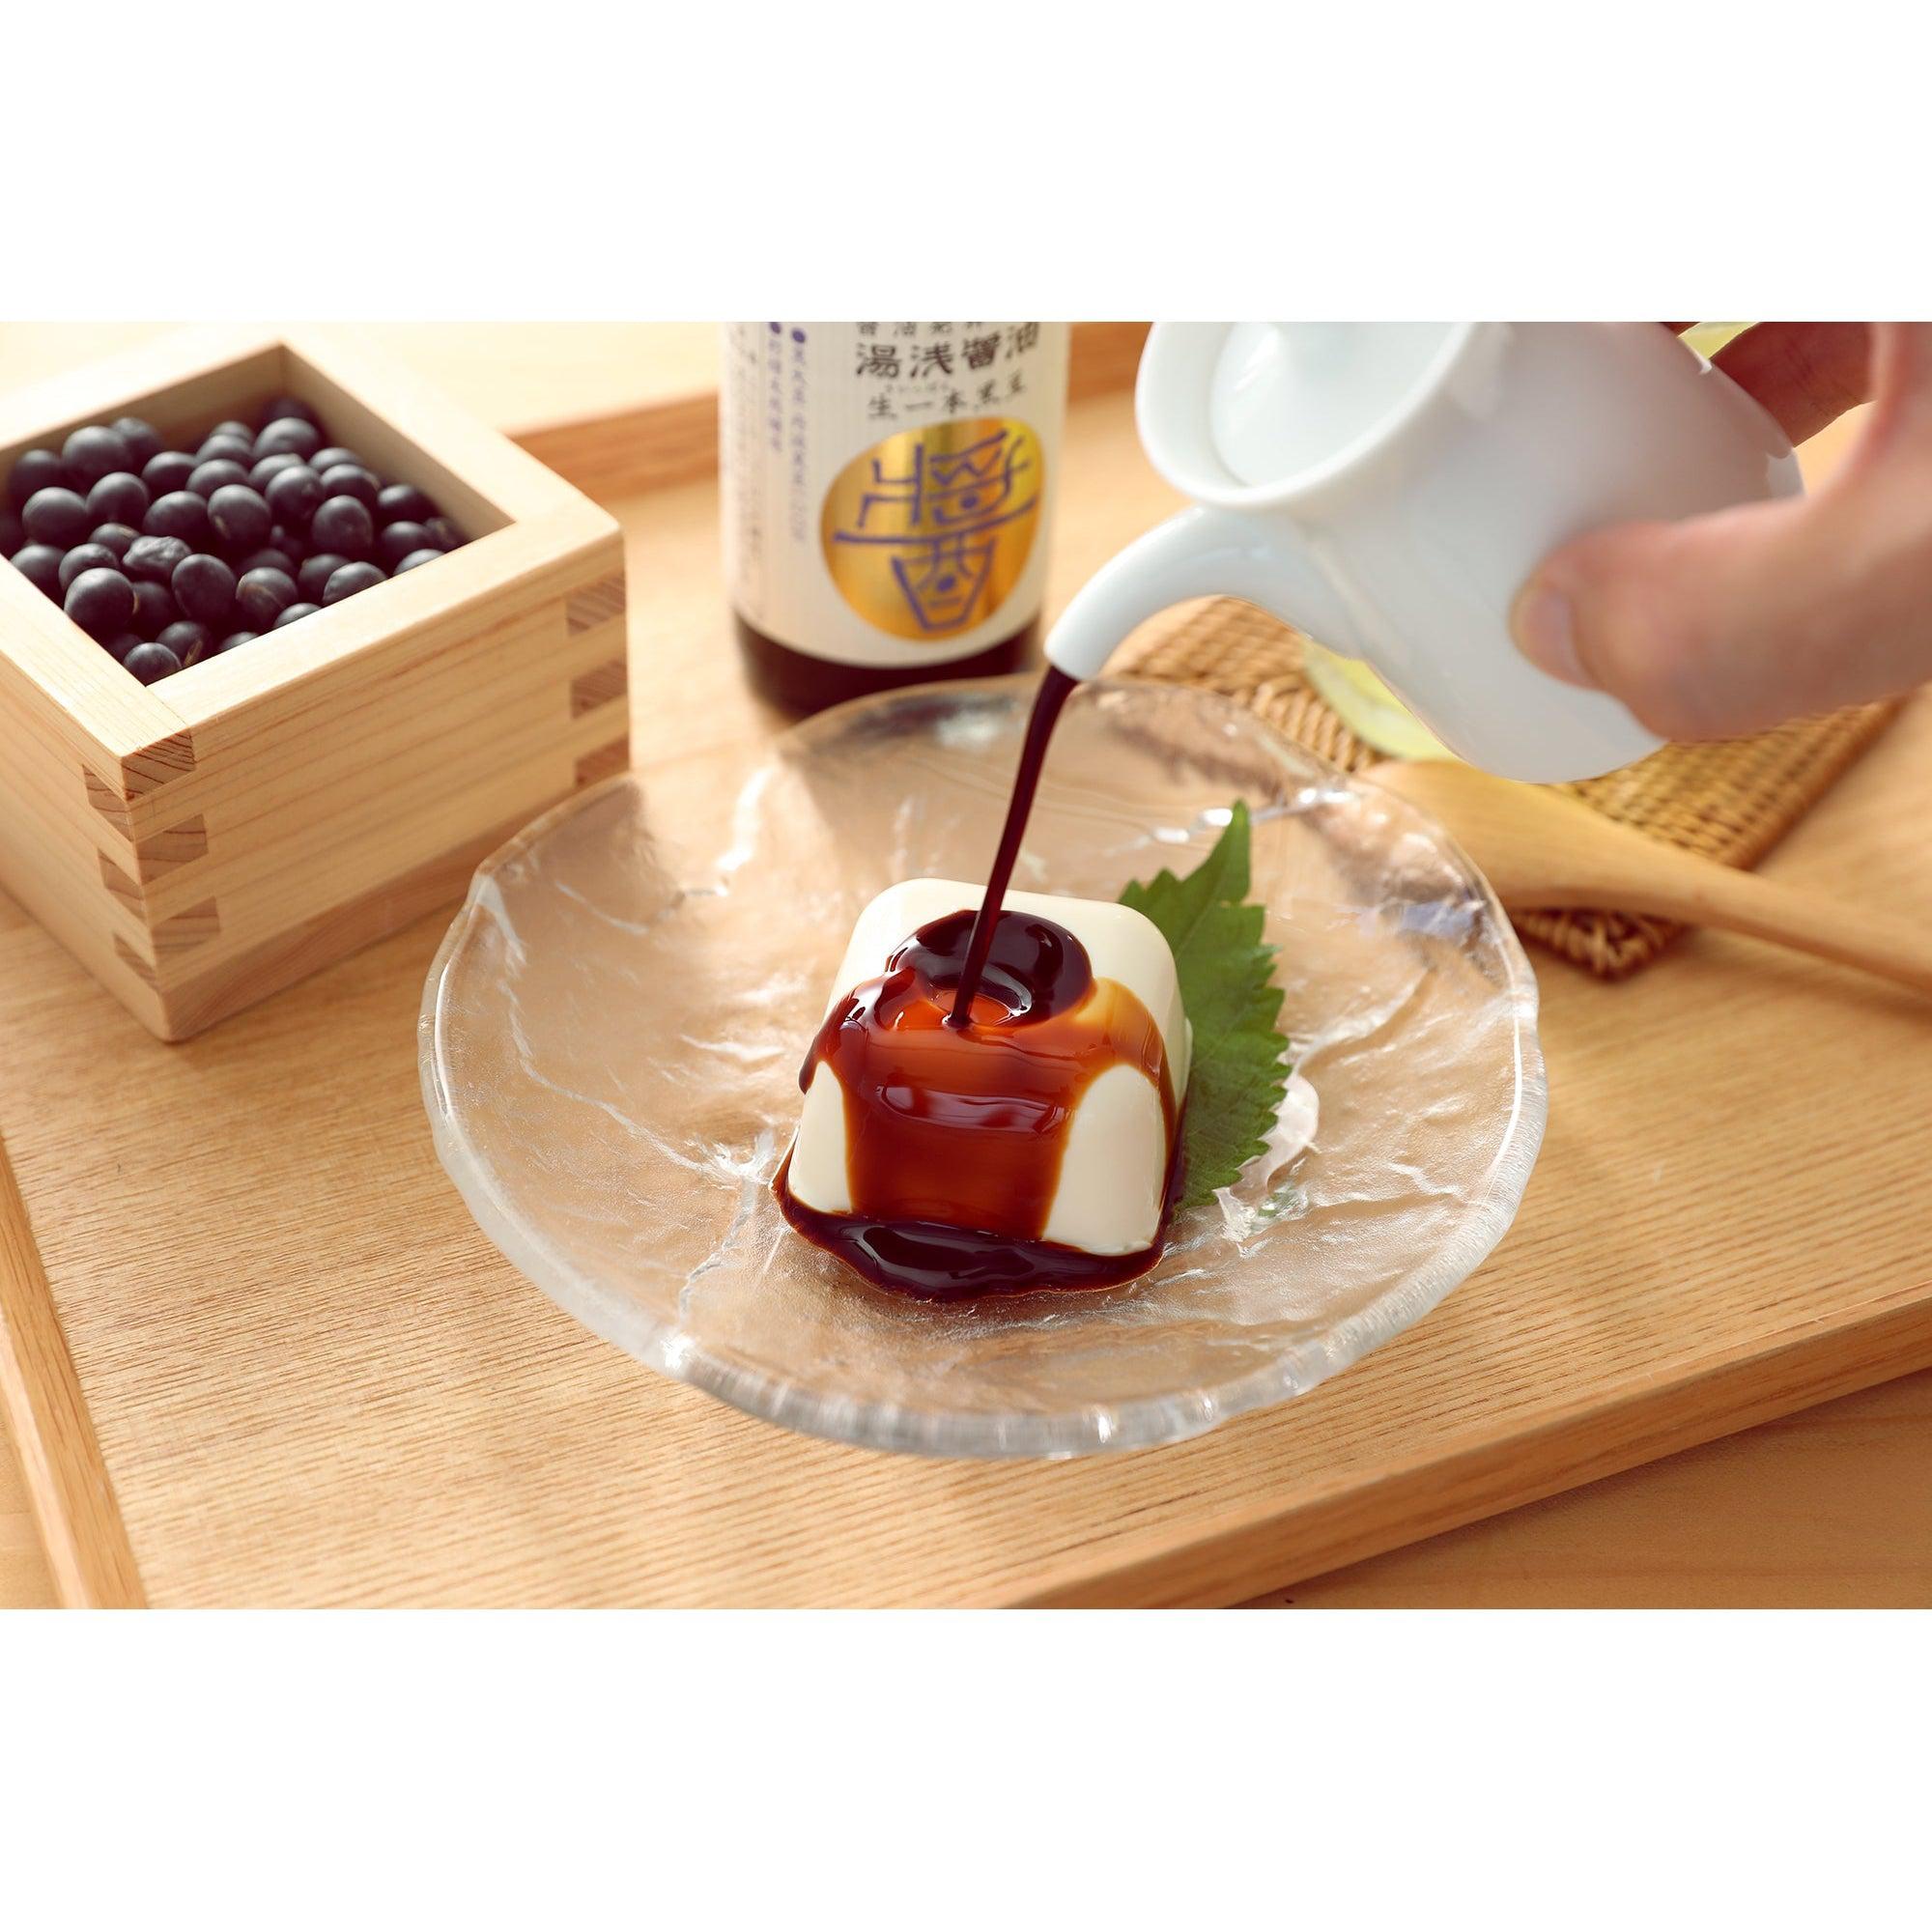 Yuasa Kuromame Shoyu Japanese Black Soybean Sauce 200ml